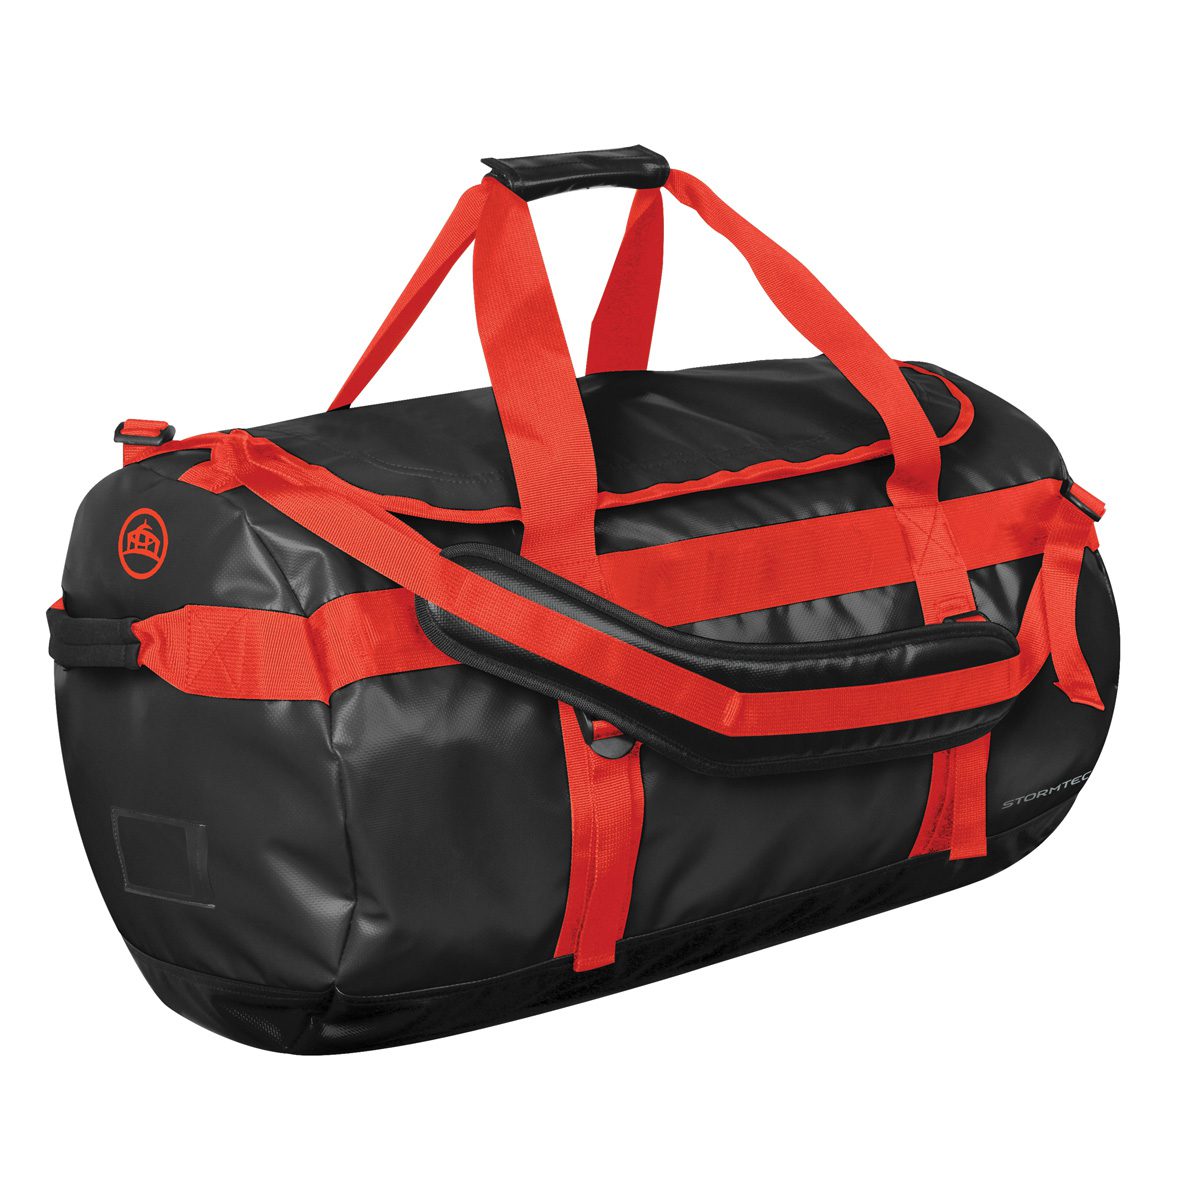 Stormtech Atlantis Waterproof Gear Bag - Medium #GBW-1MLE Black / Red